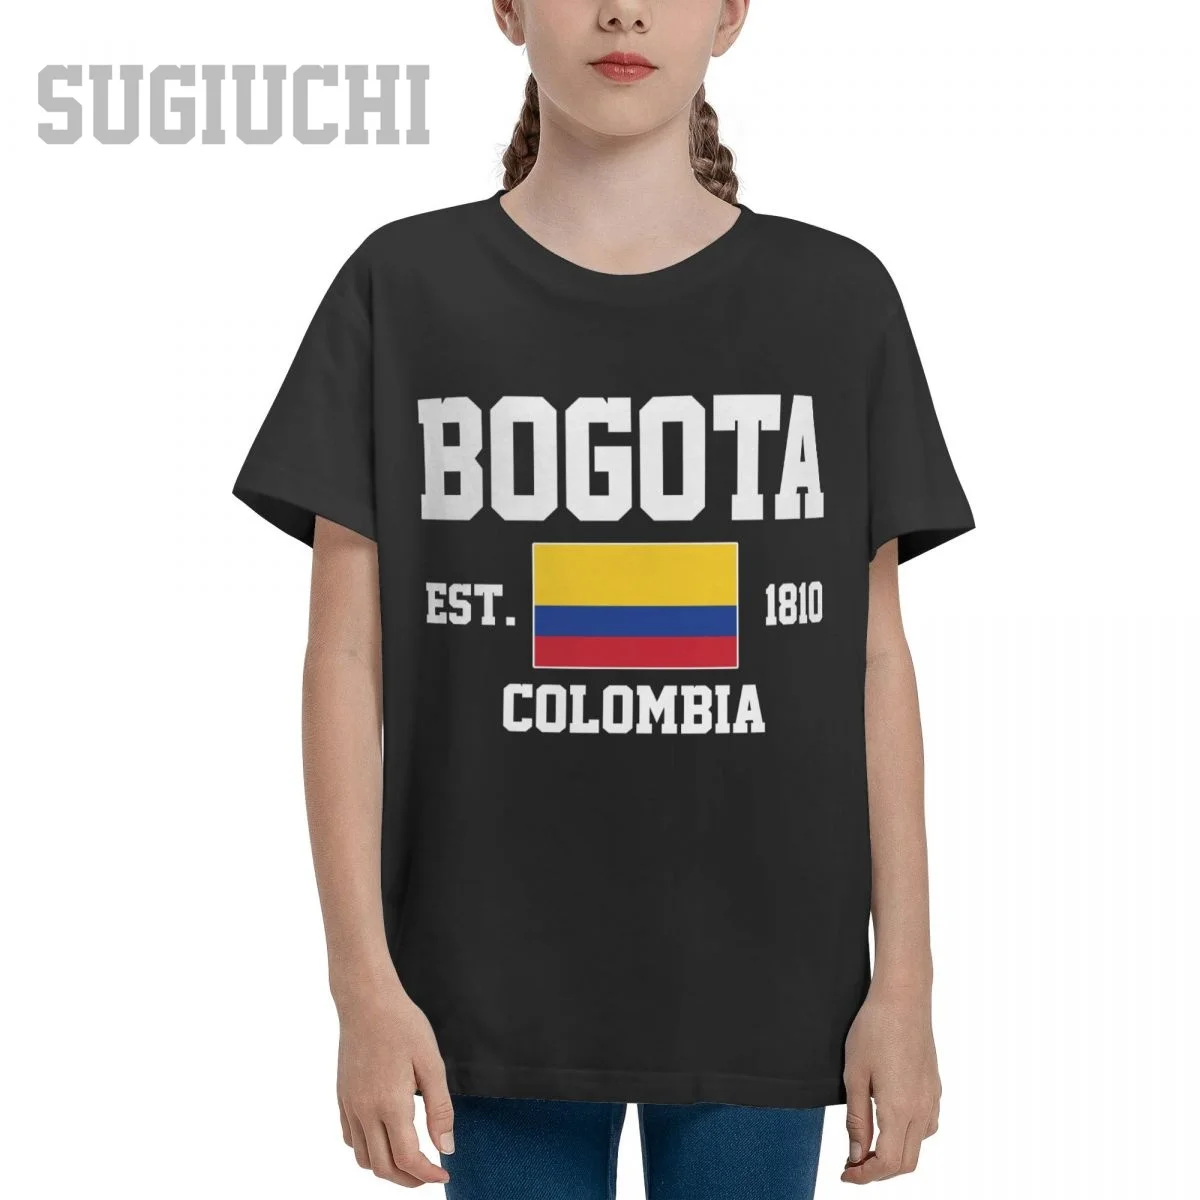 Unisex Youth Boy/Girl Colombia EST.1810 Bogota Capital T-shirt Kids tshirt tee 100% Cotton T Shirt o-neck short Children